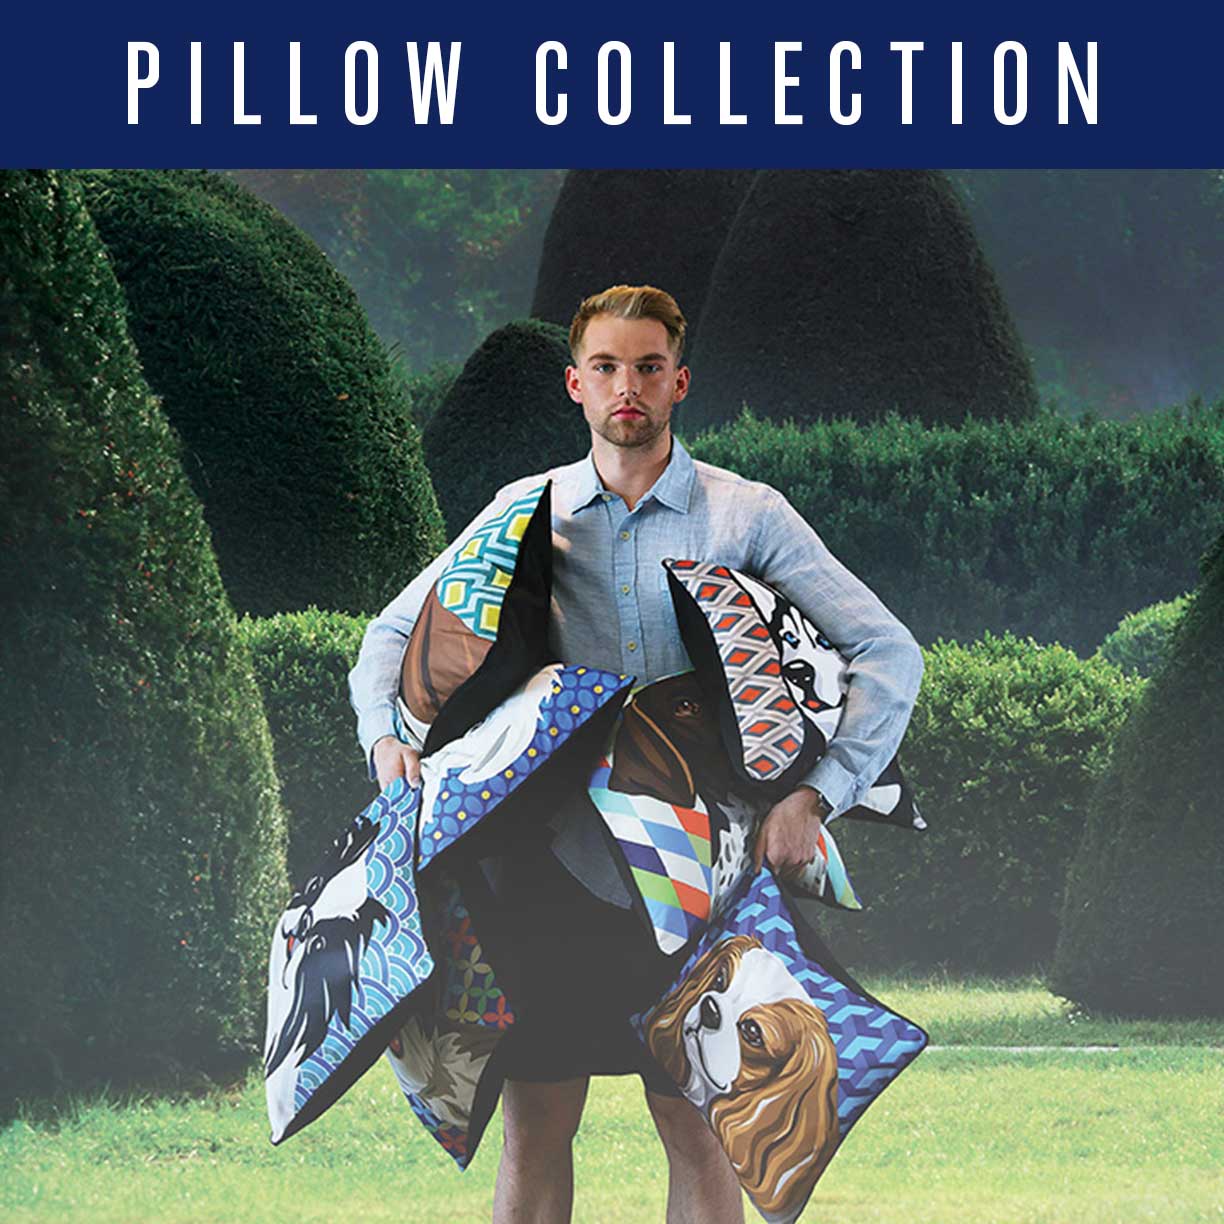 model holding pillows